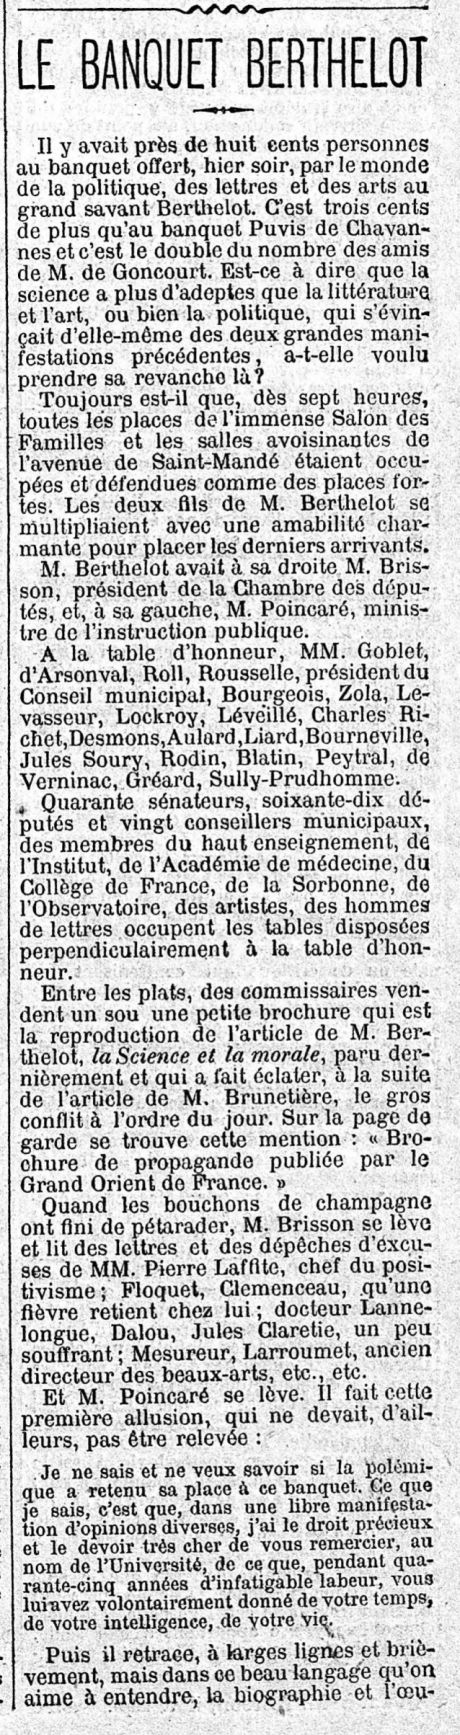 Le Figaro du 05-04-1895 Source Gallica.bnf.fr